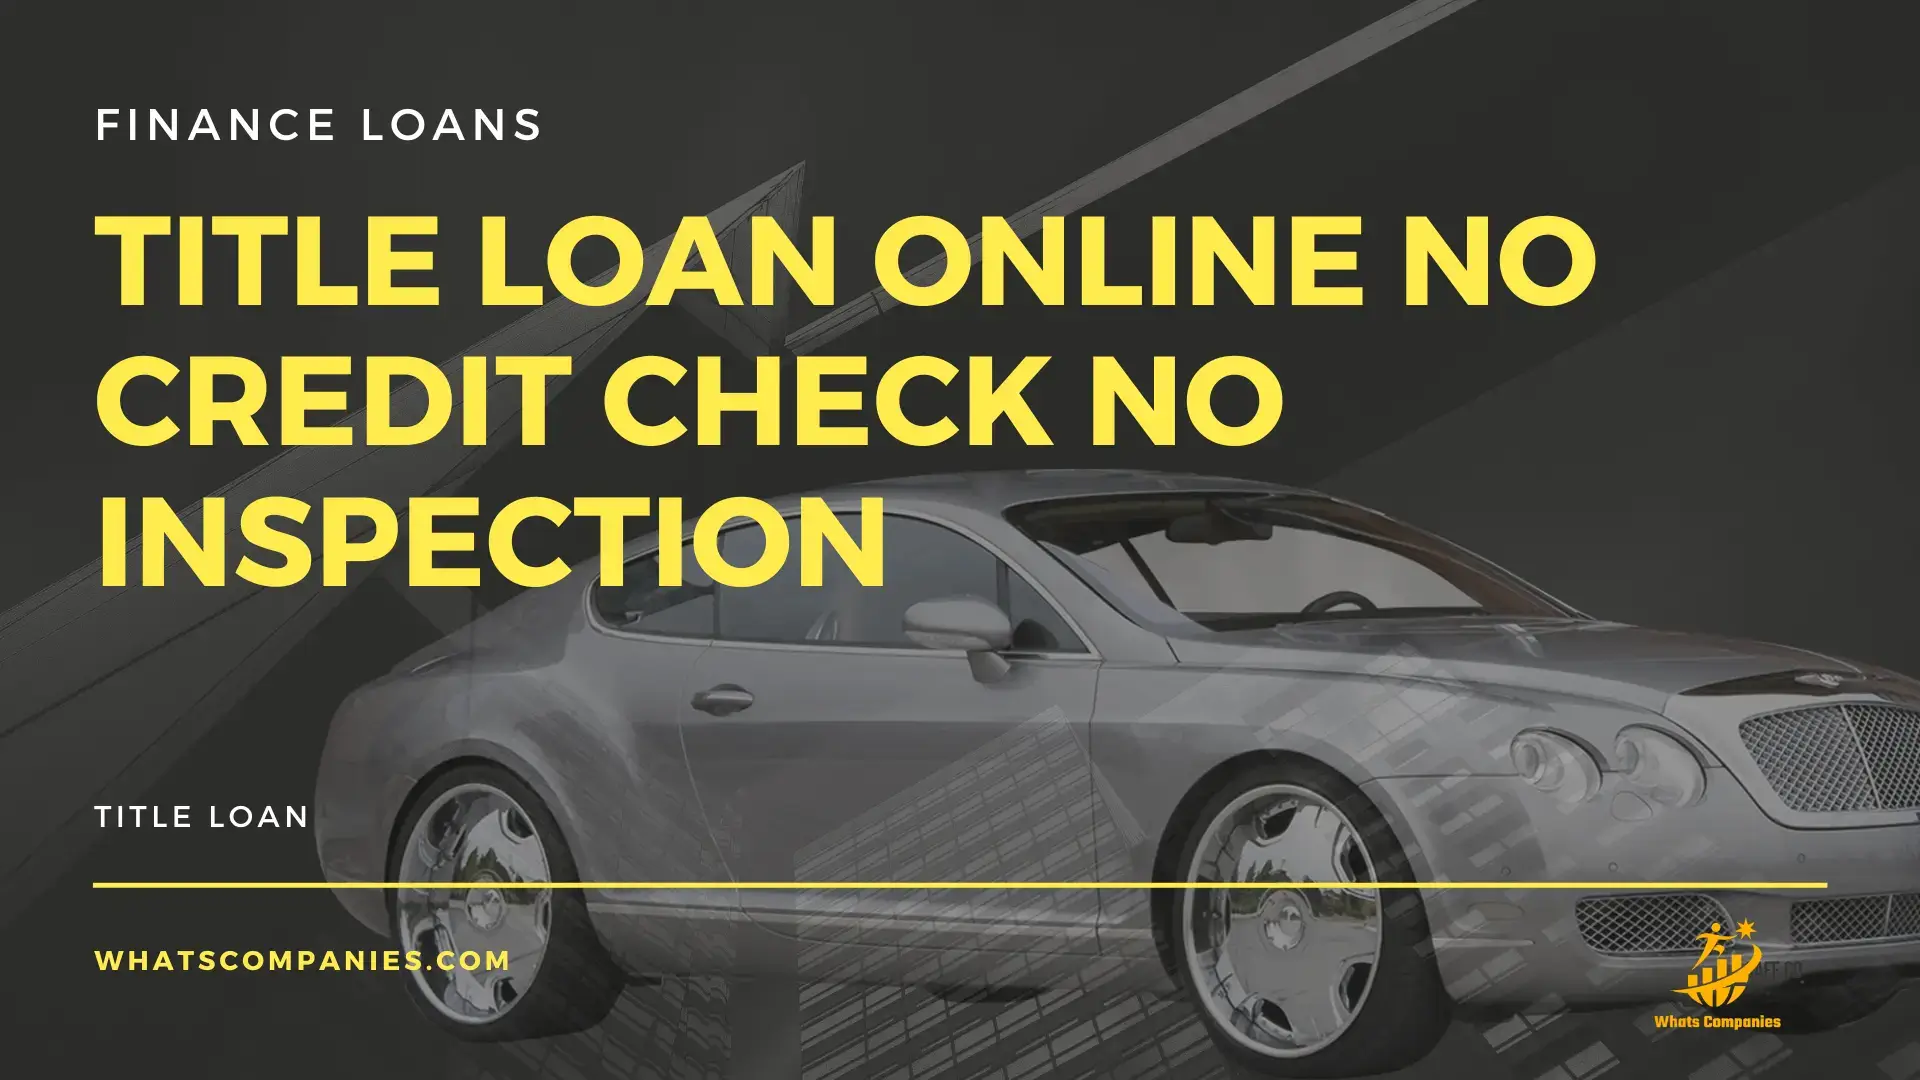 title loan online no credit check no inspection title loan online no credit check no inspection